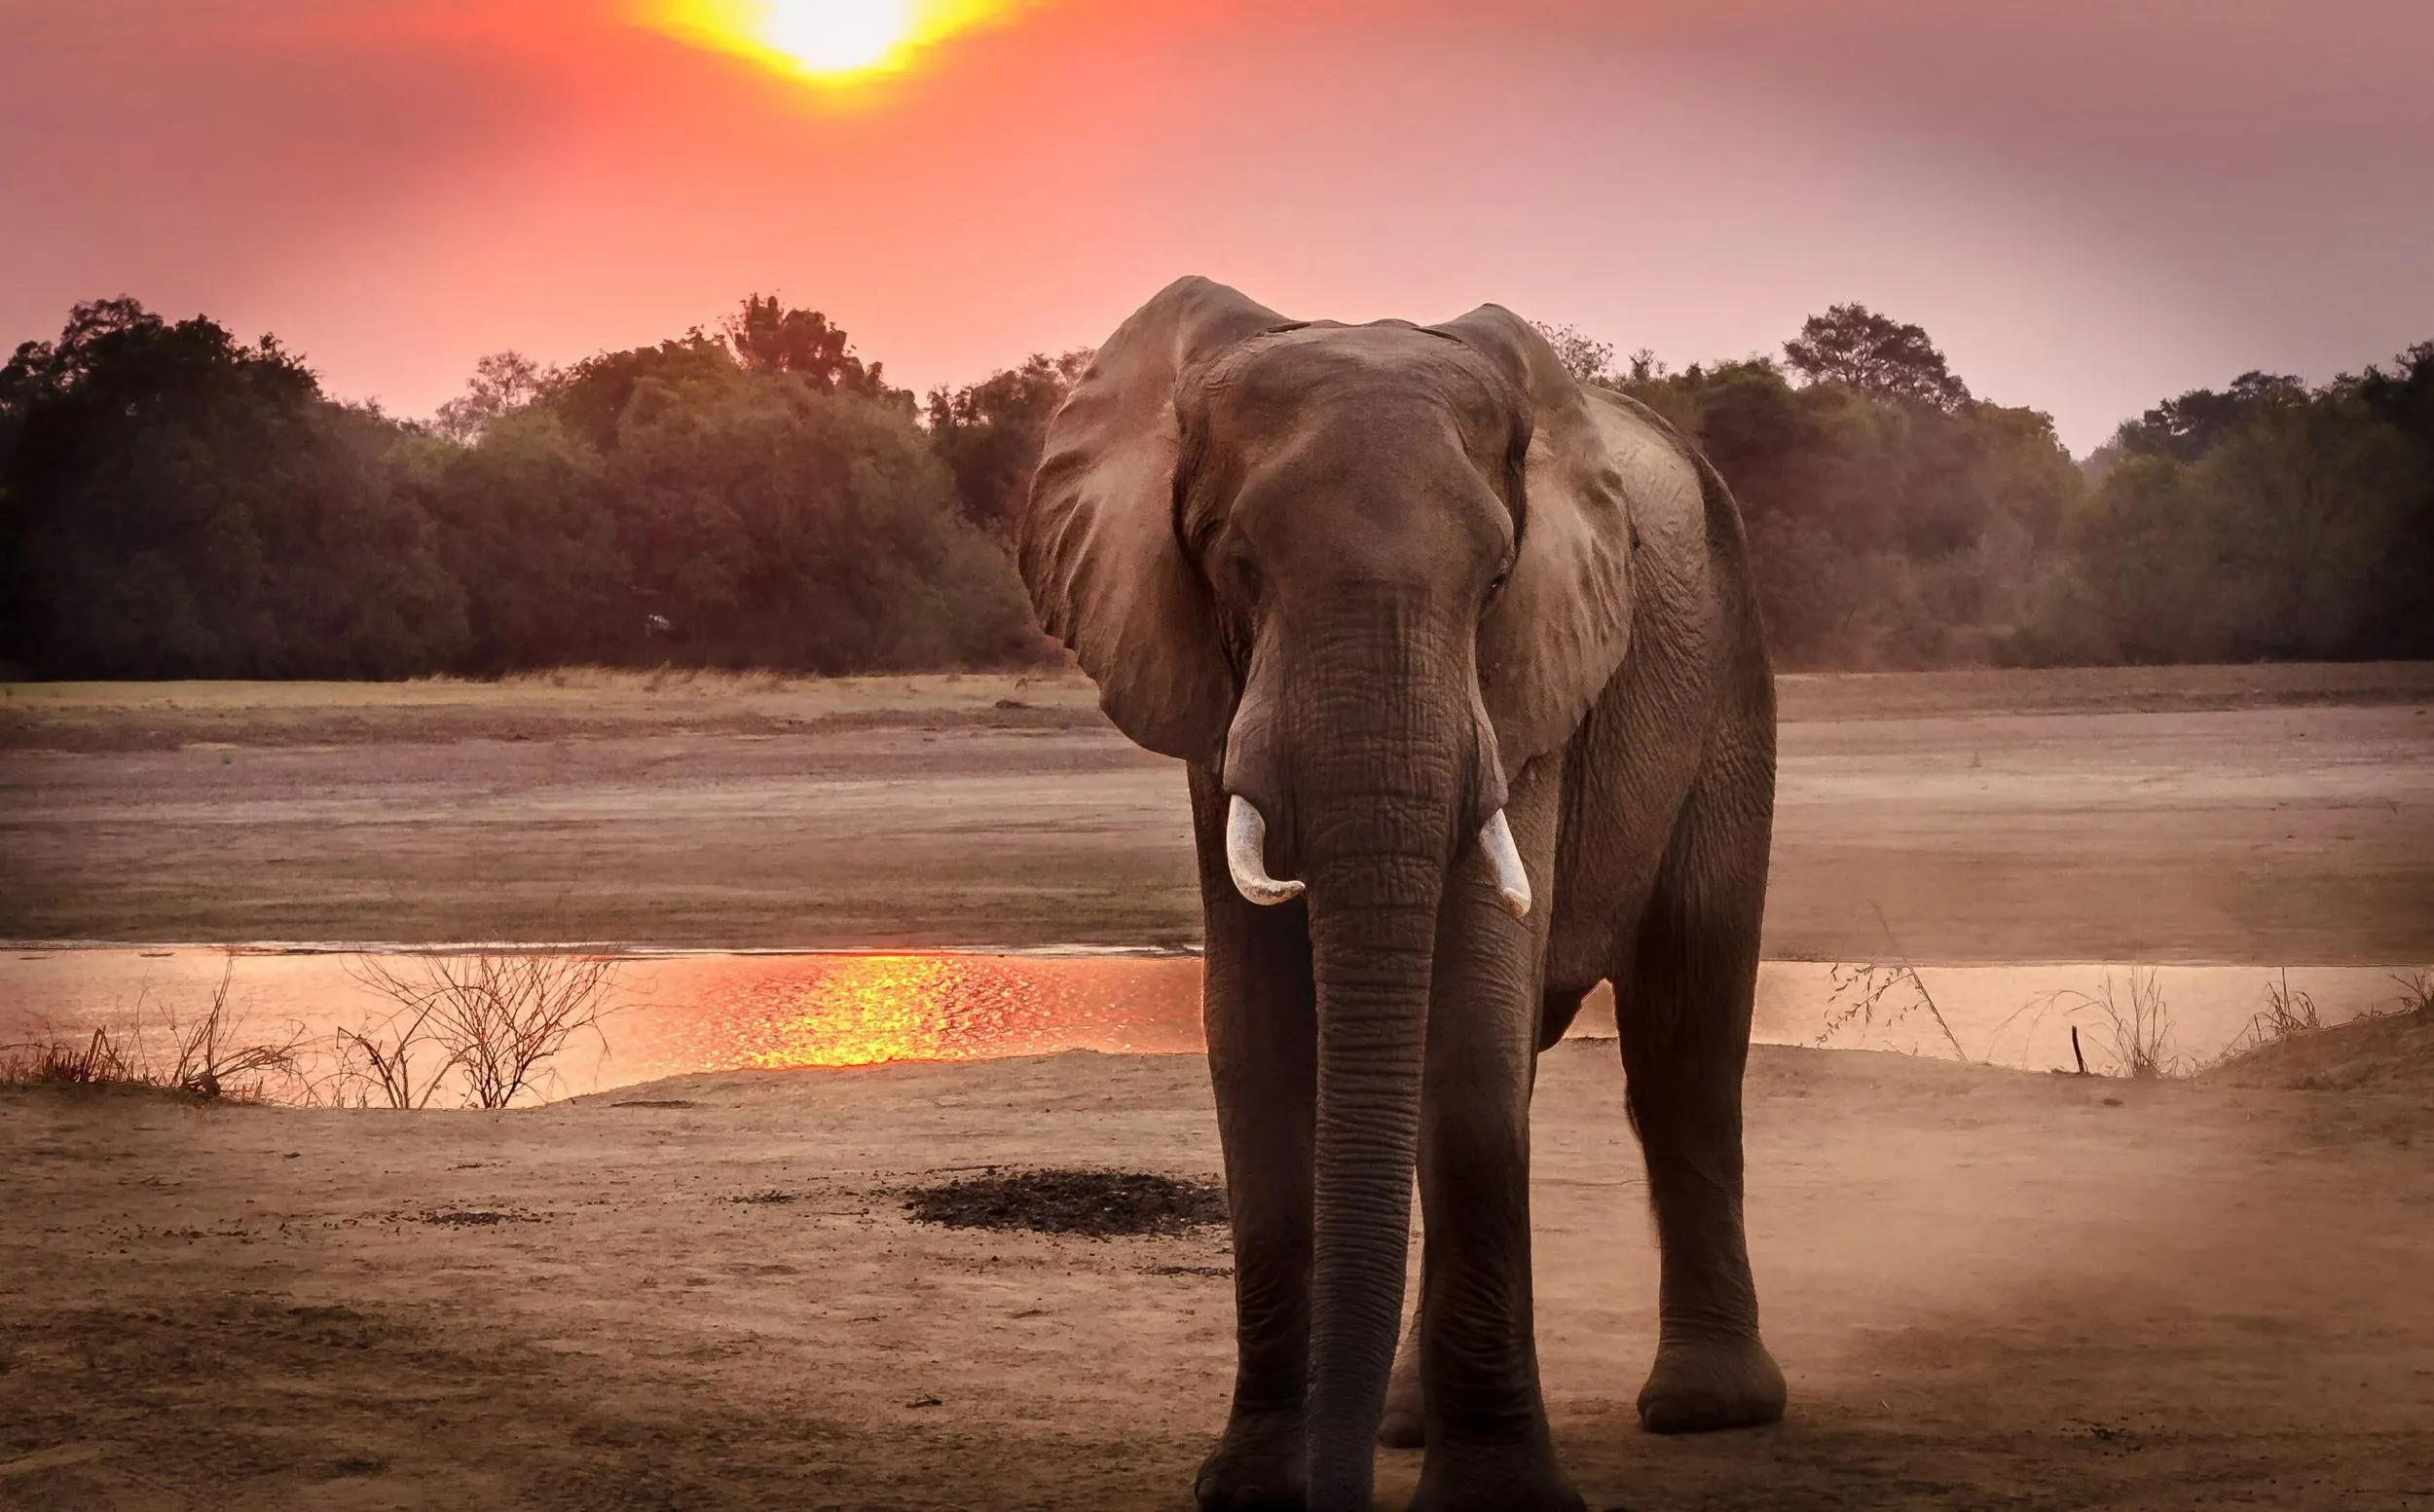 An elephant at sunset